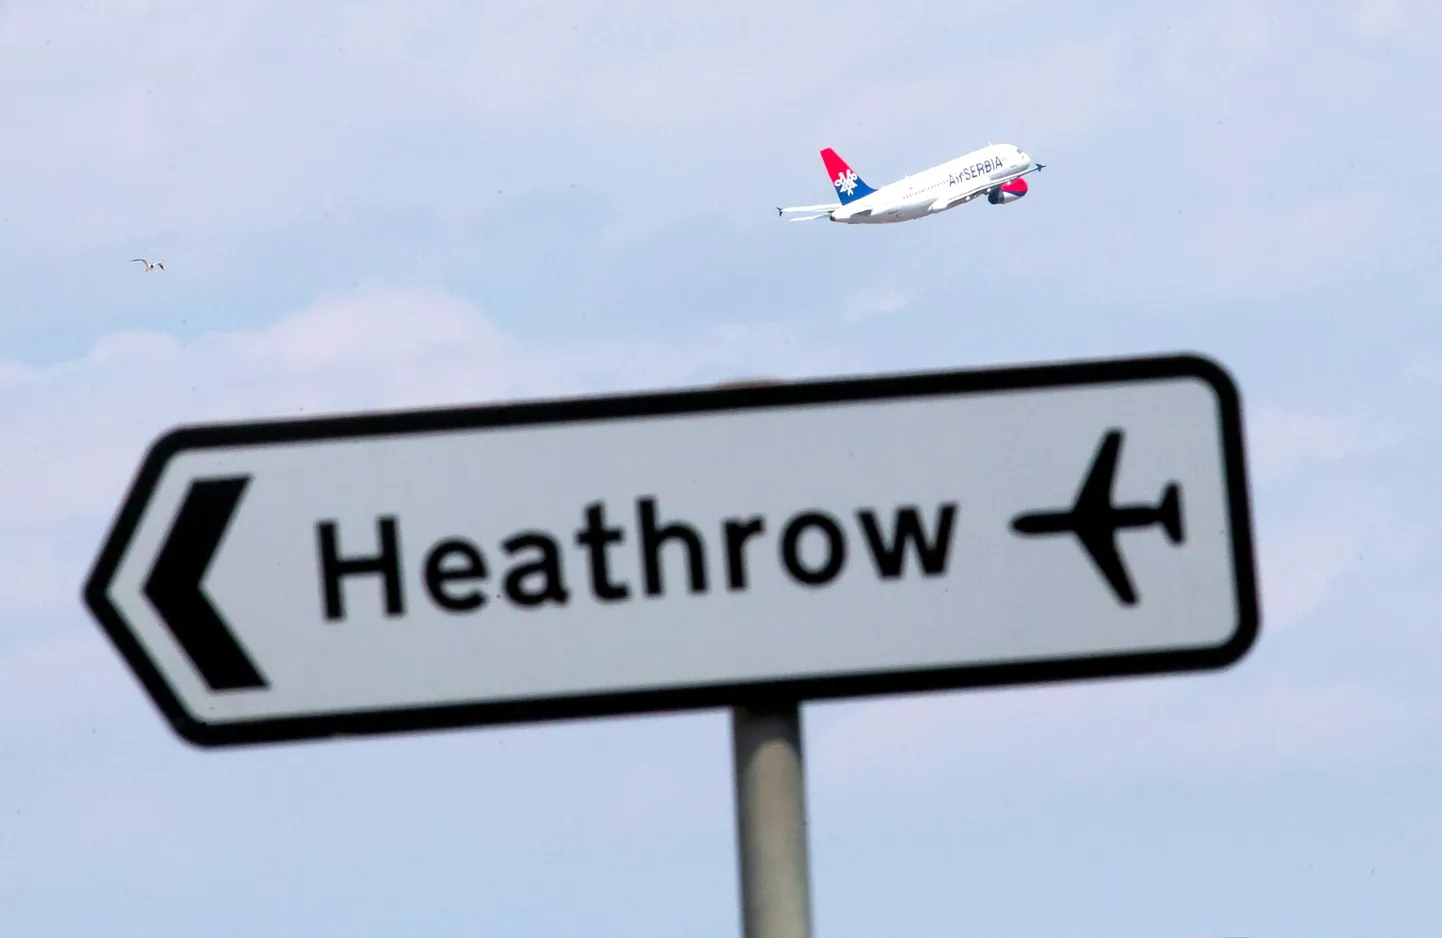 Heathrow lennujaama teeviit.